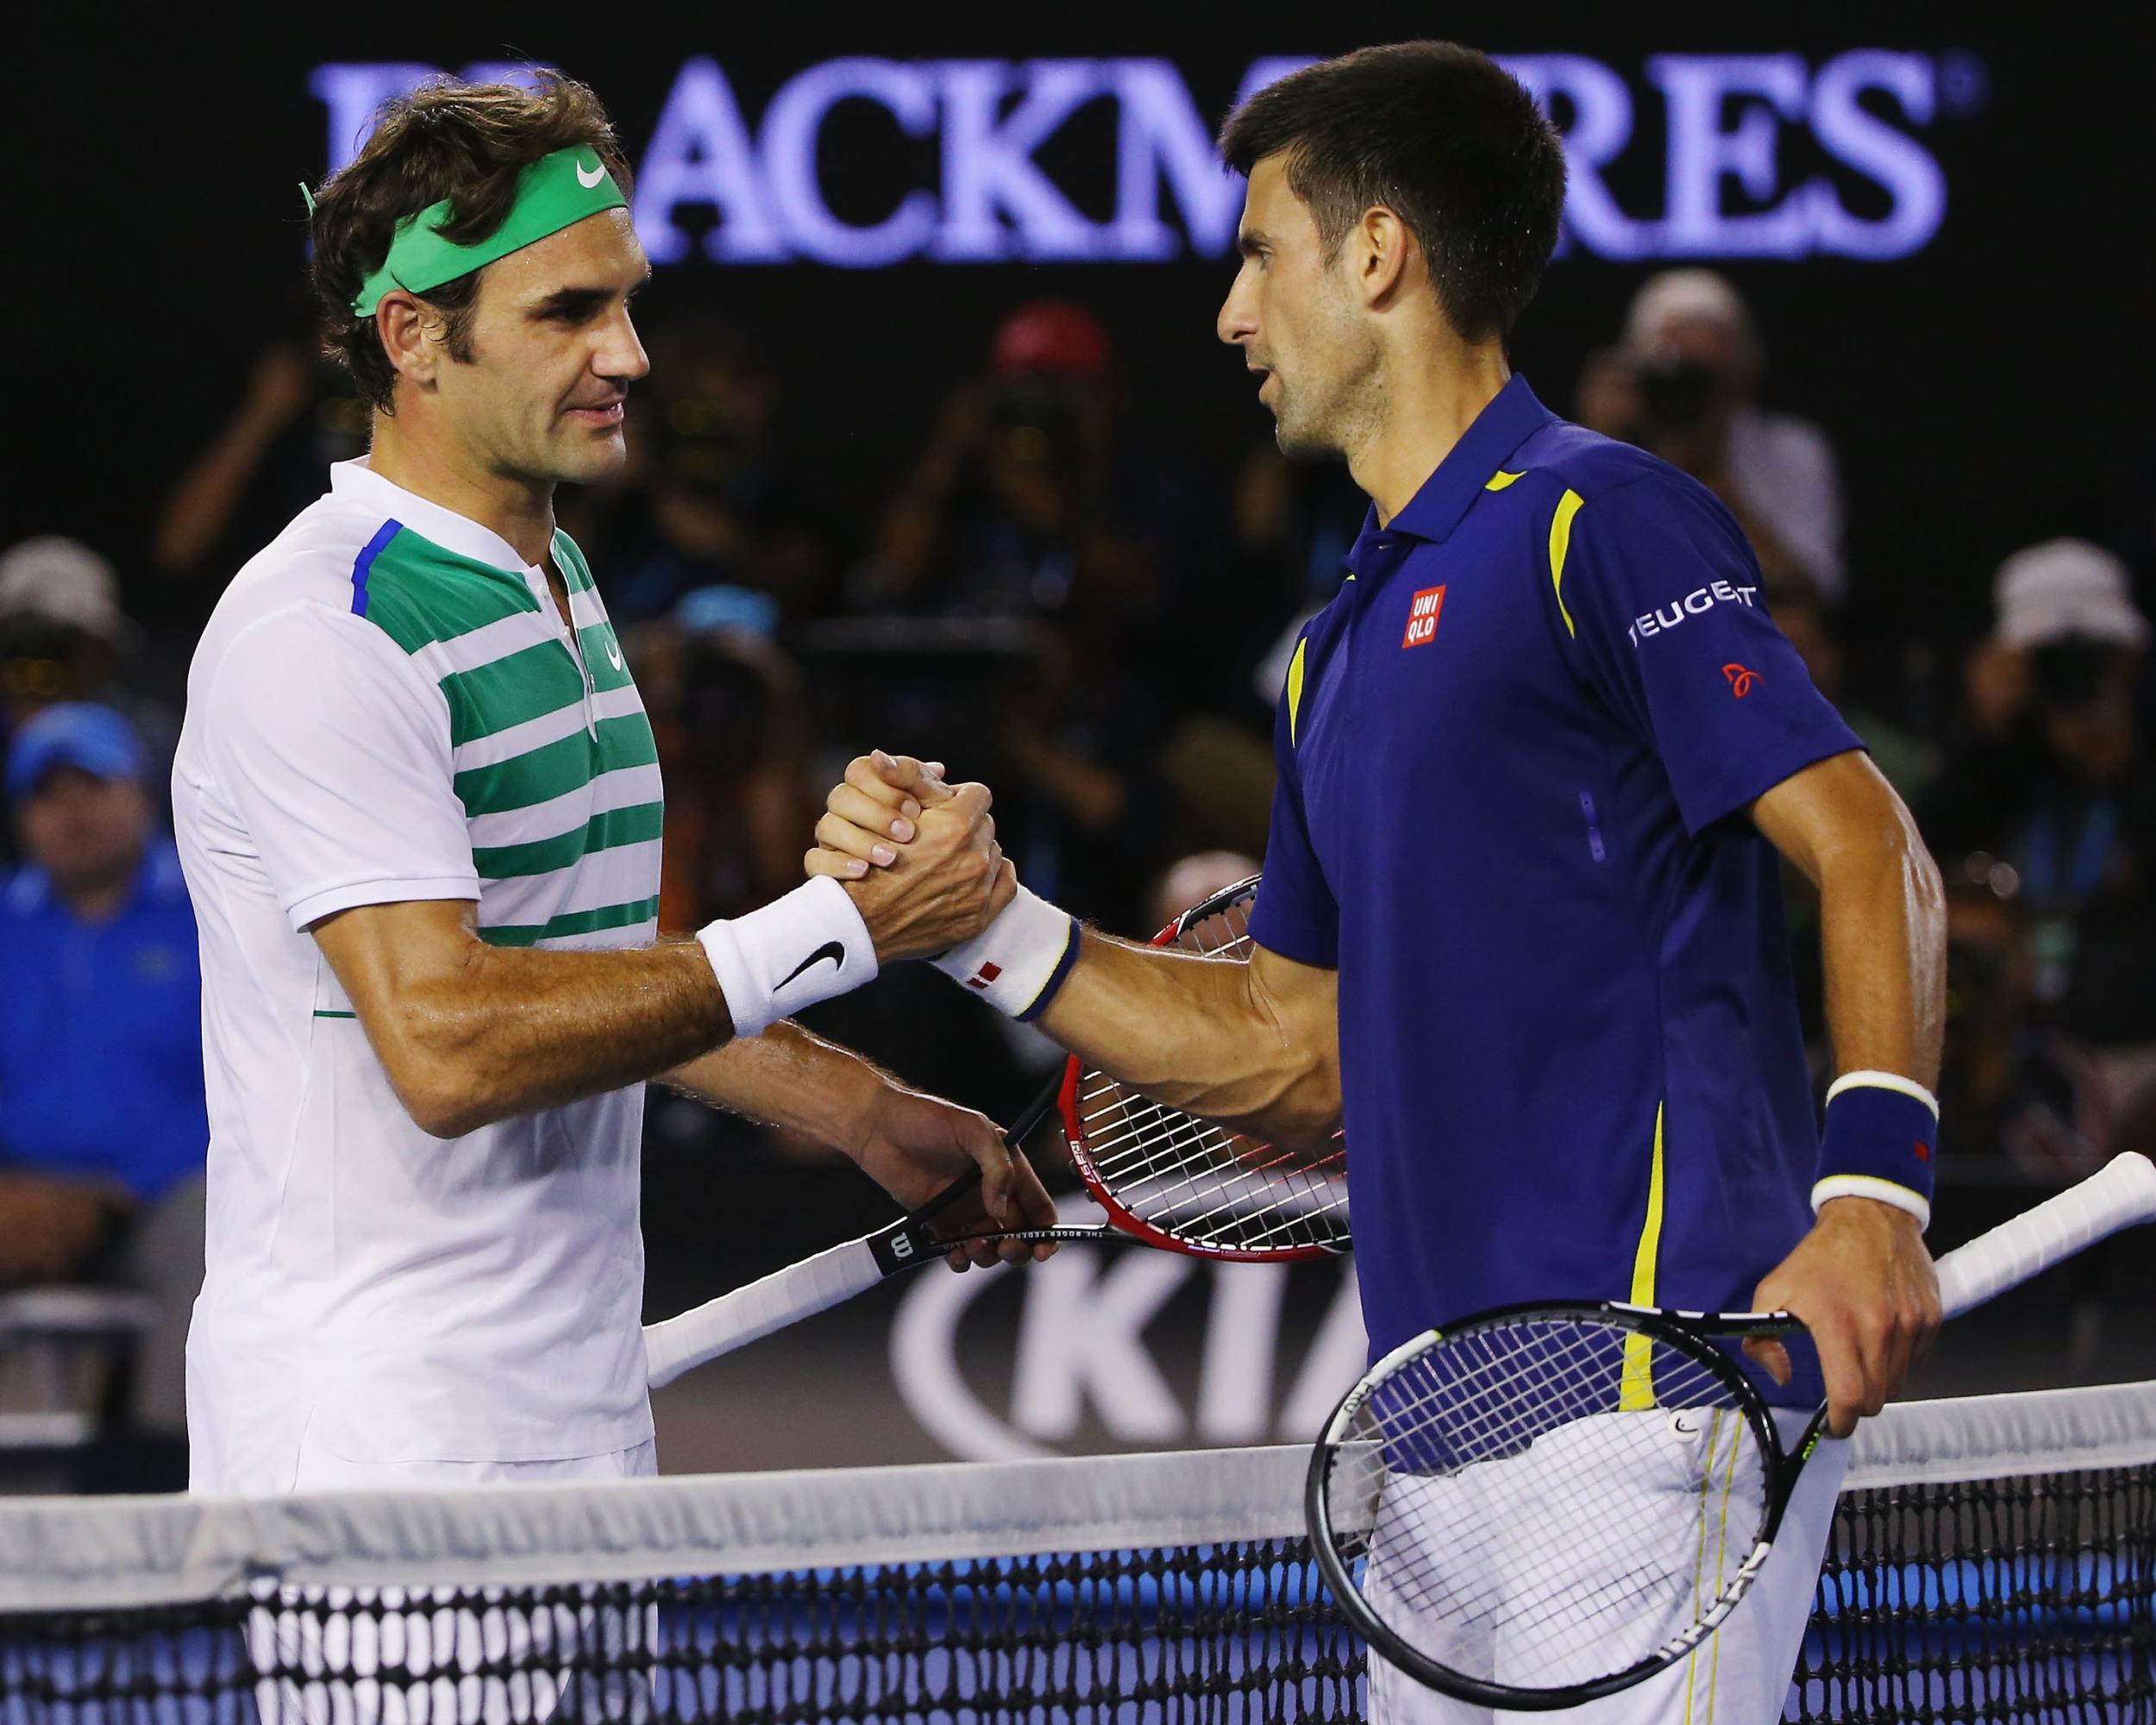 Roger Federer and Novak Djokovic have won 31 grand slam titles between them